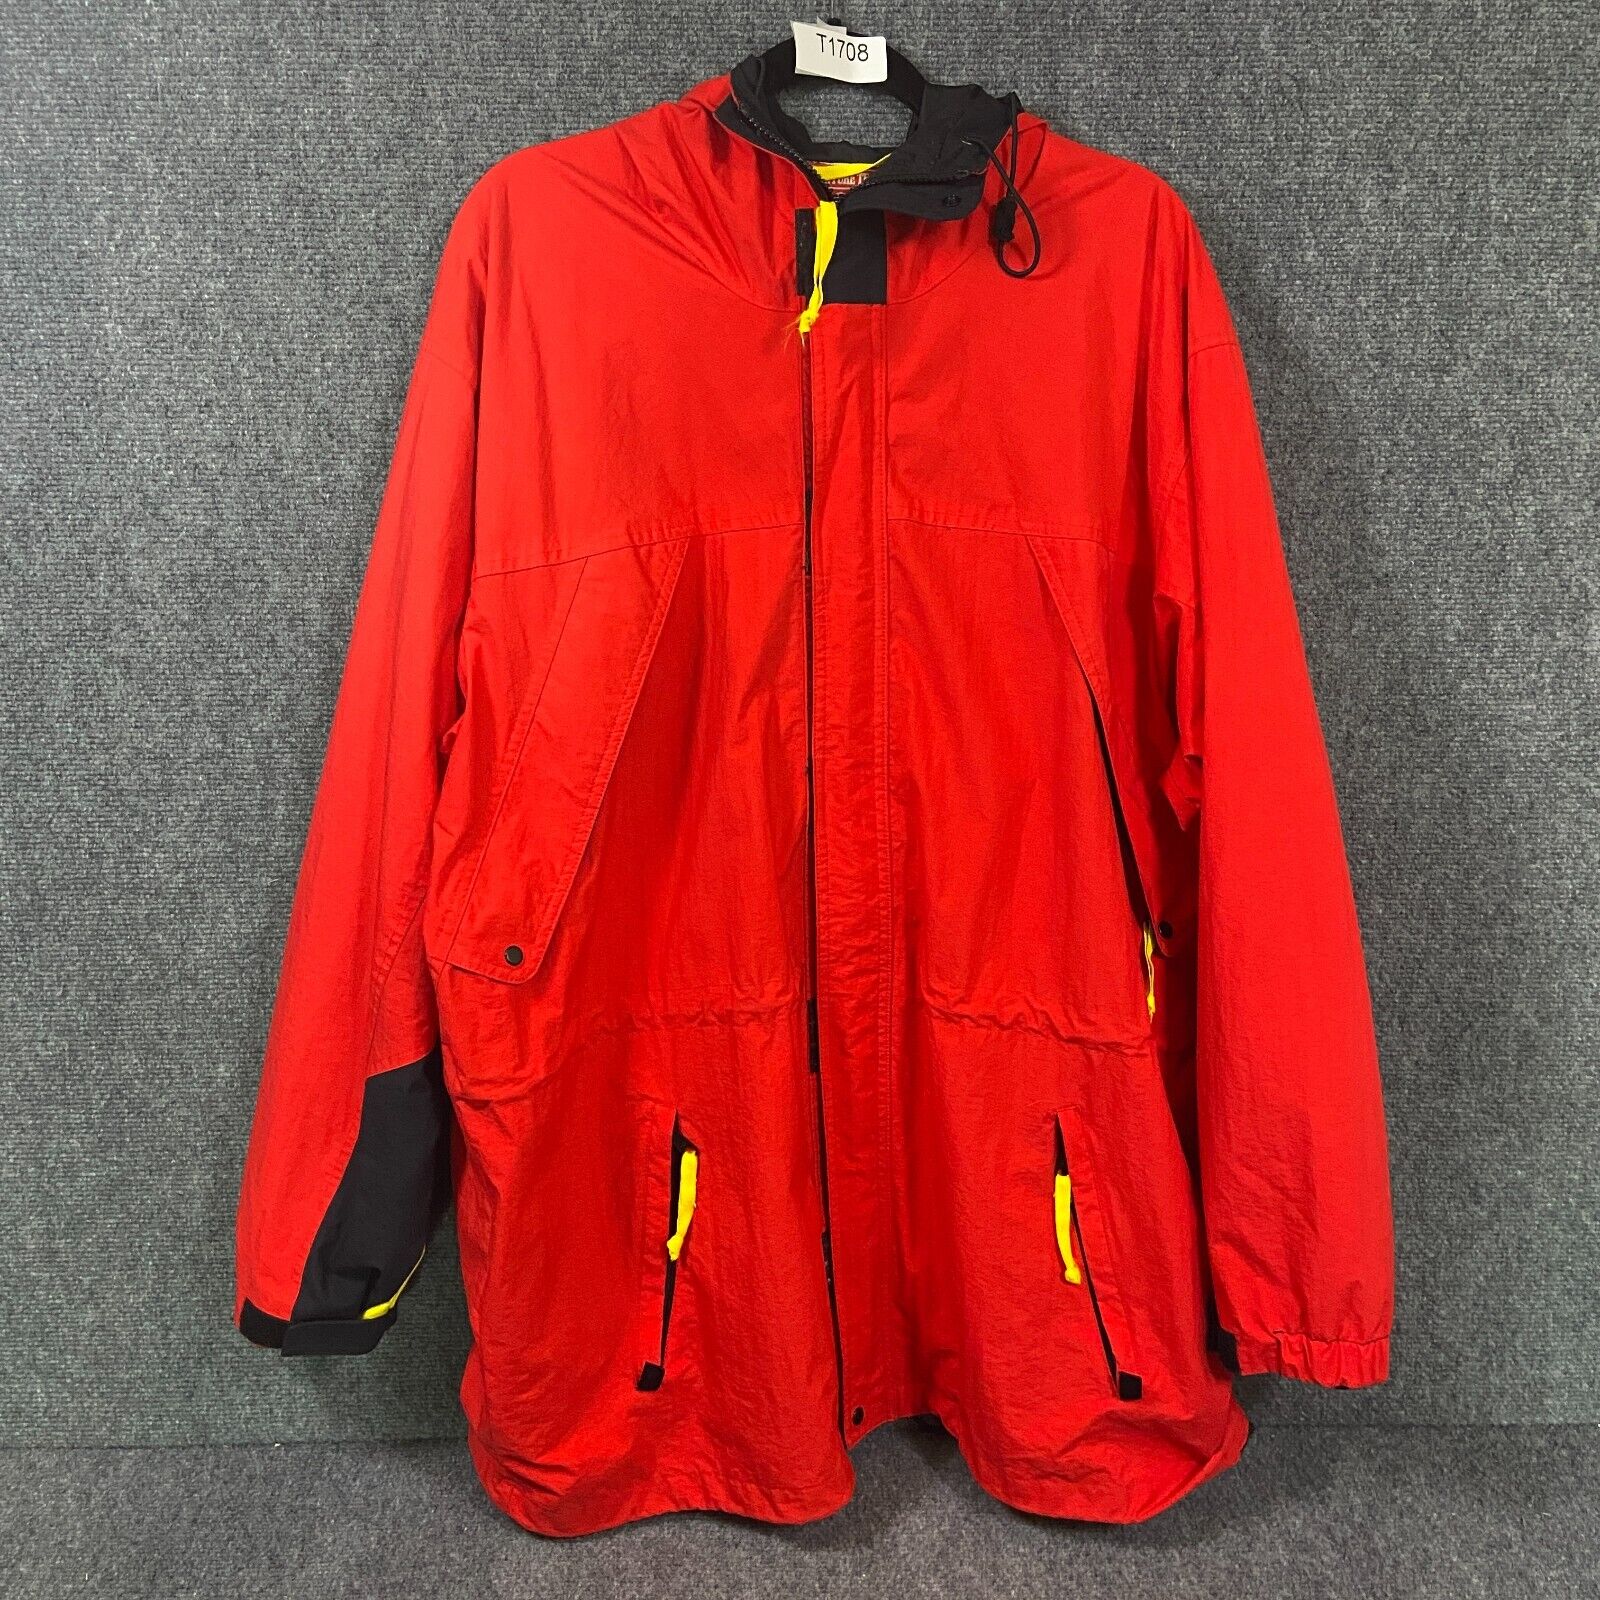 Vintage Marlboro Jacket Full Zip Adventure Team Nylon Mesh XL Red Great Cond.